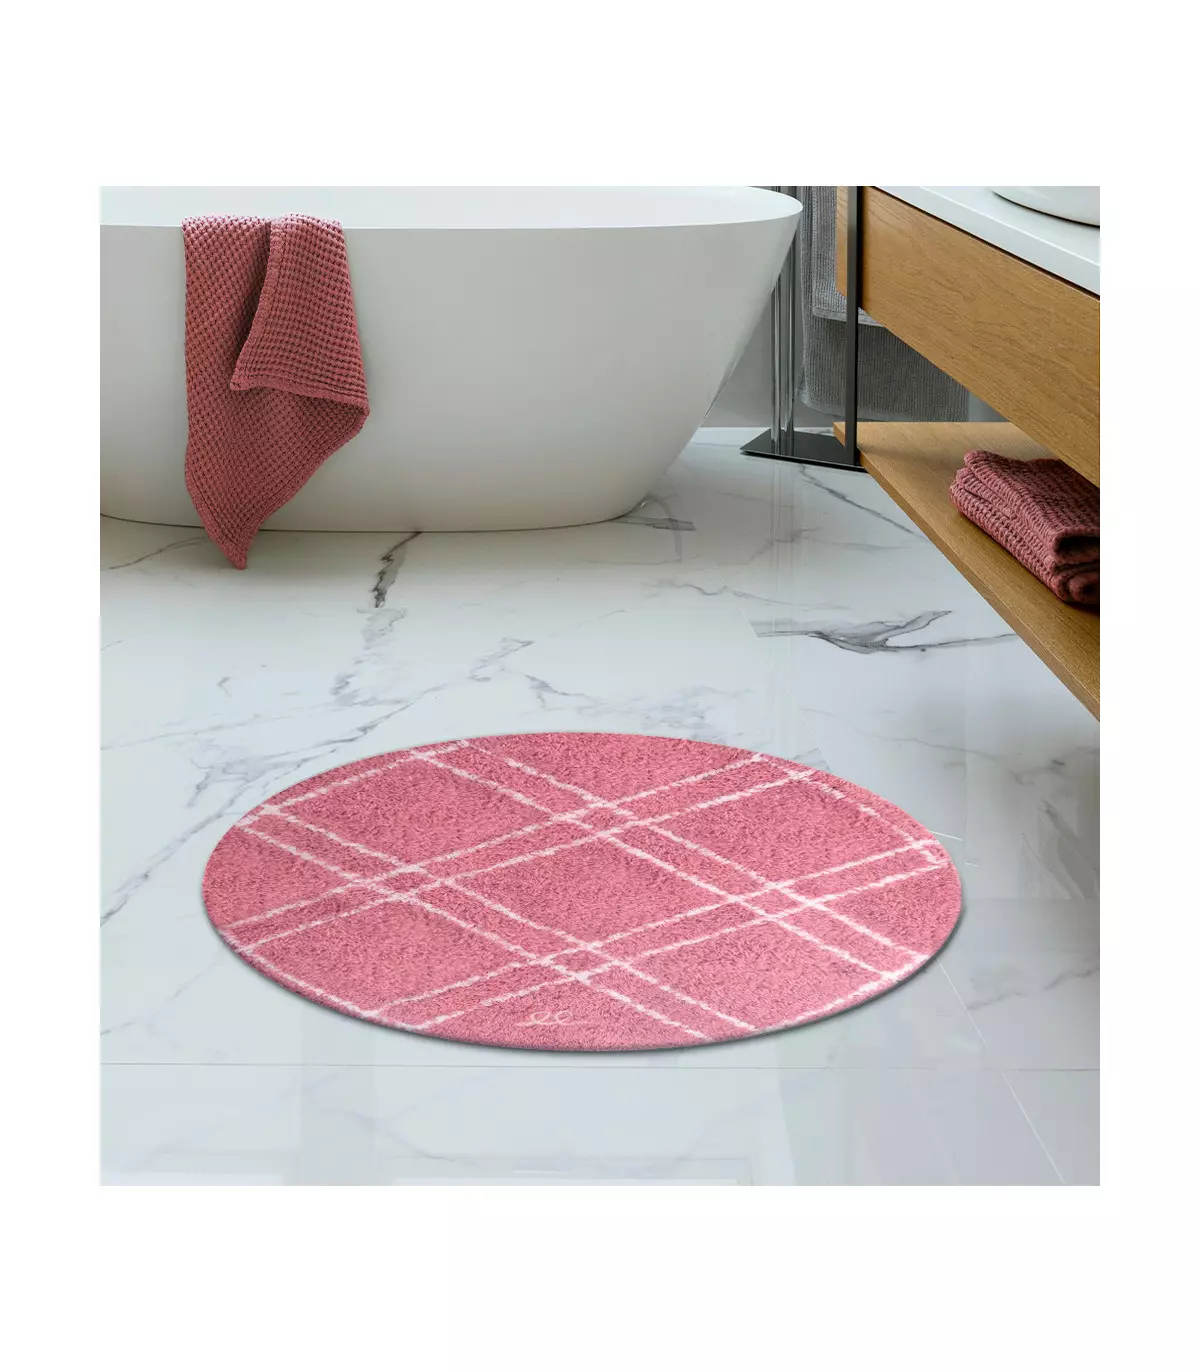 Bathroom Rugs 3 Piece Set - Non-Slip Ultra Thin Bath Rugs for Bathroom  Floor[Miami]